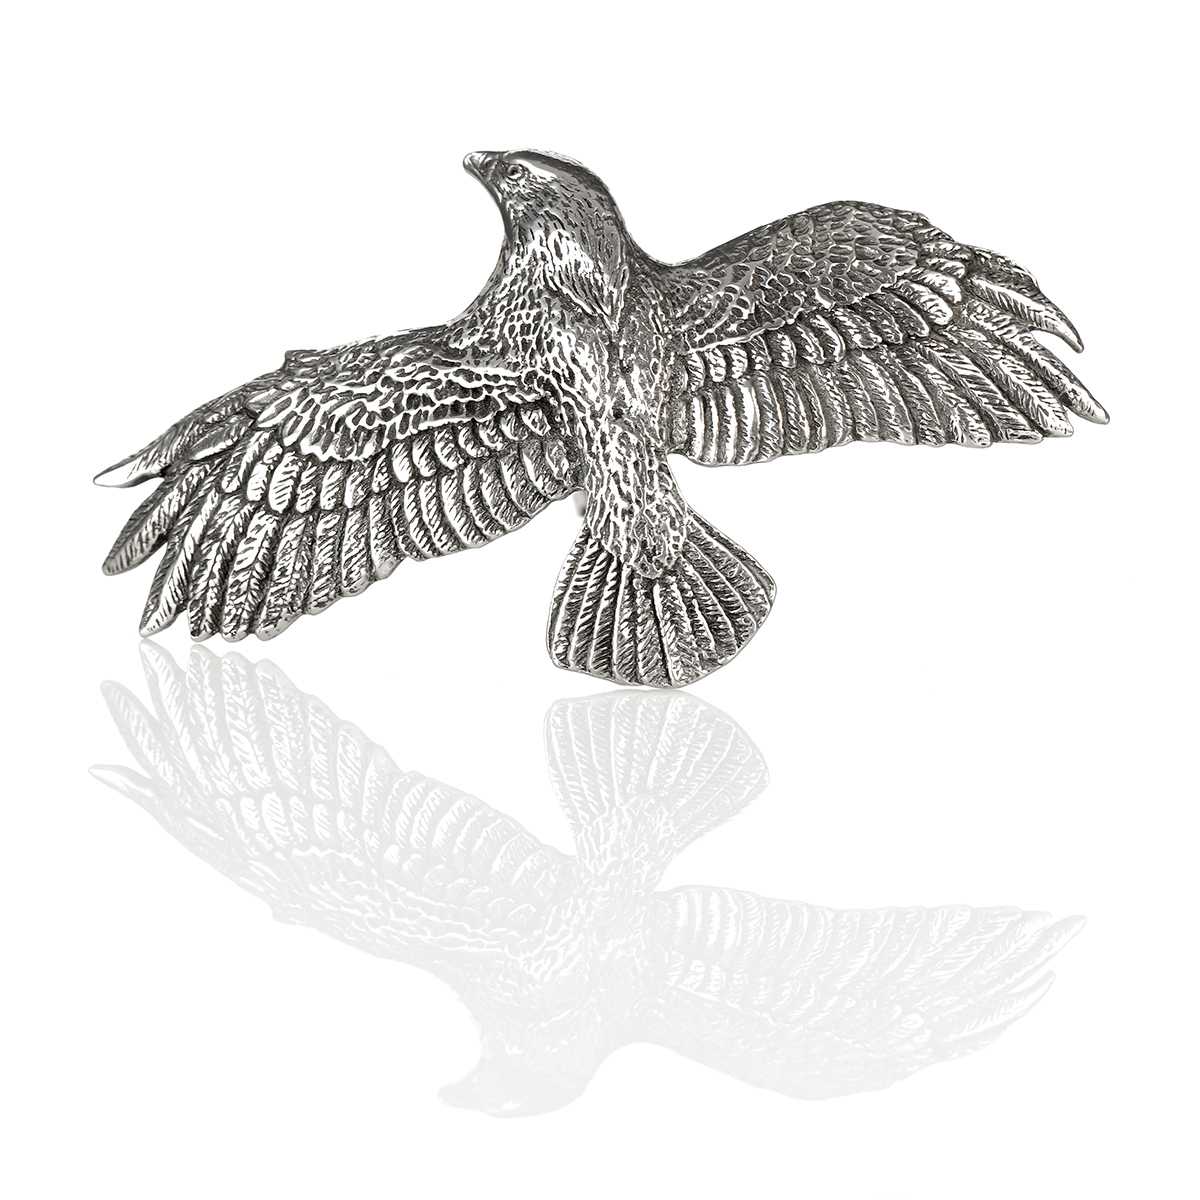 Flying Eagle Haarspange -  Fliegender Adler aus Zinn - Handgefertigt in England